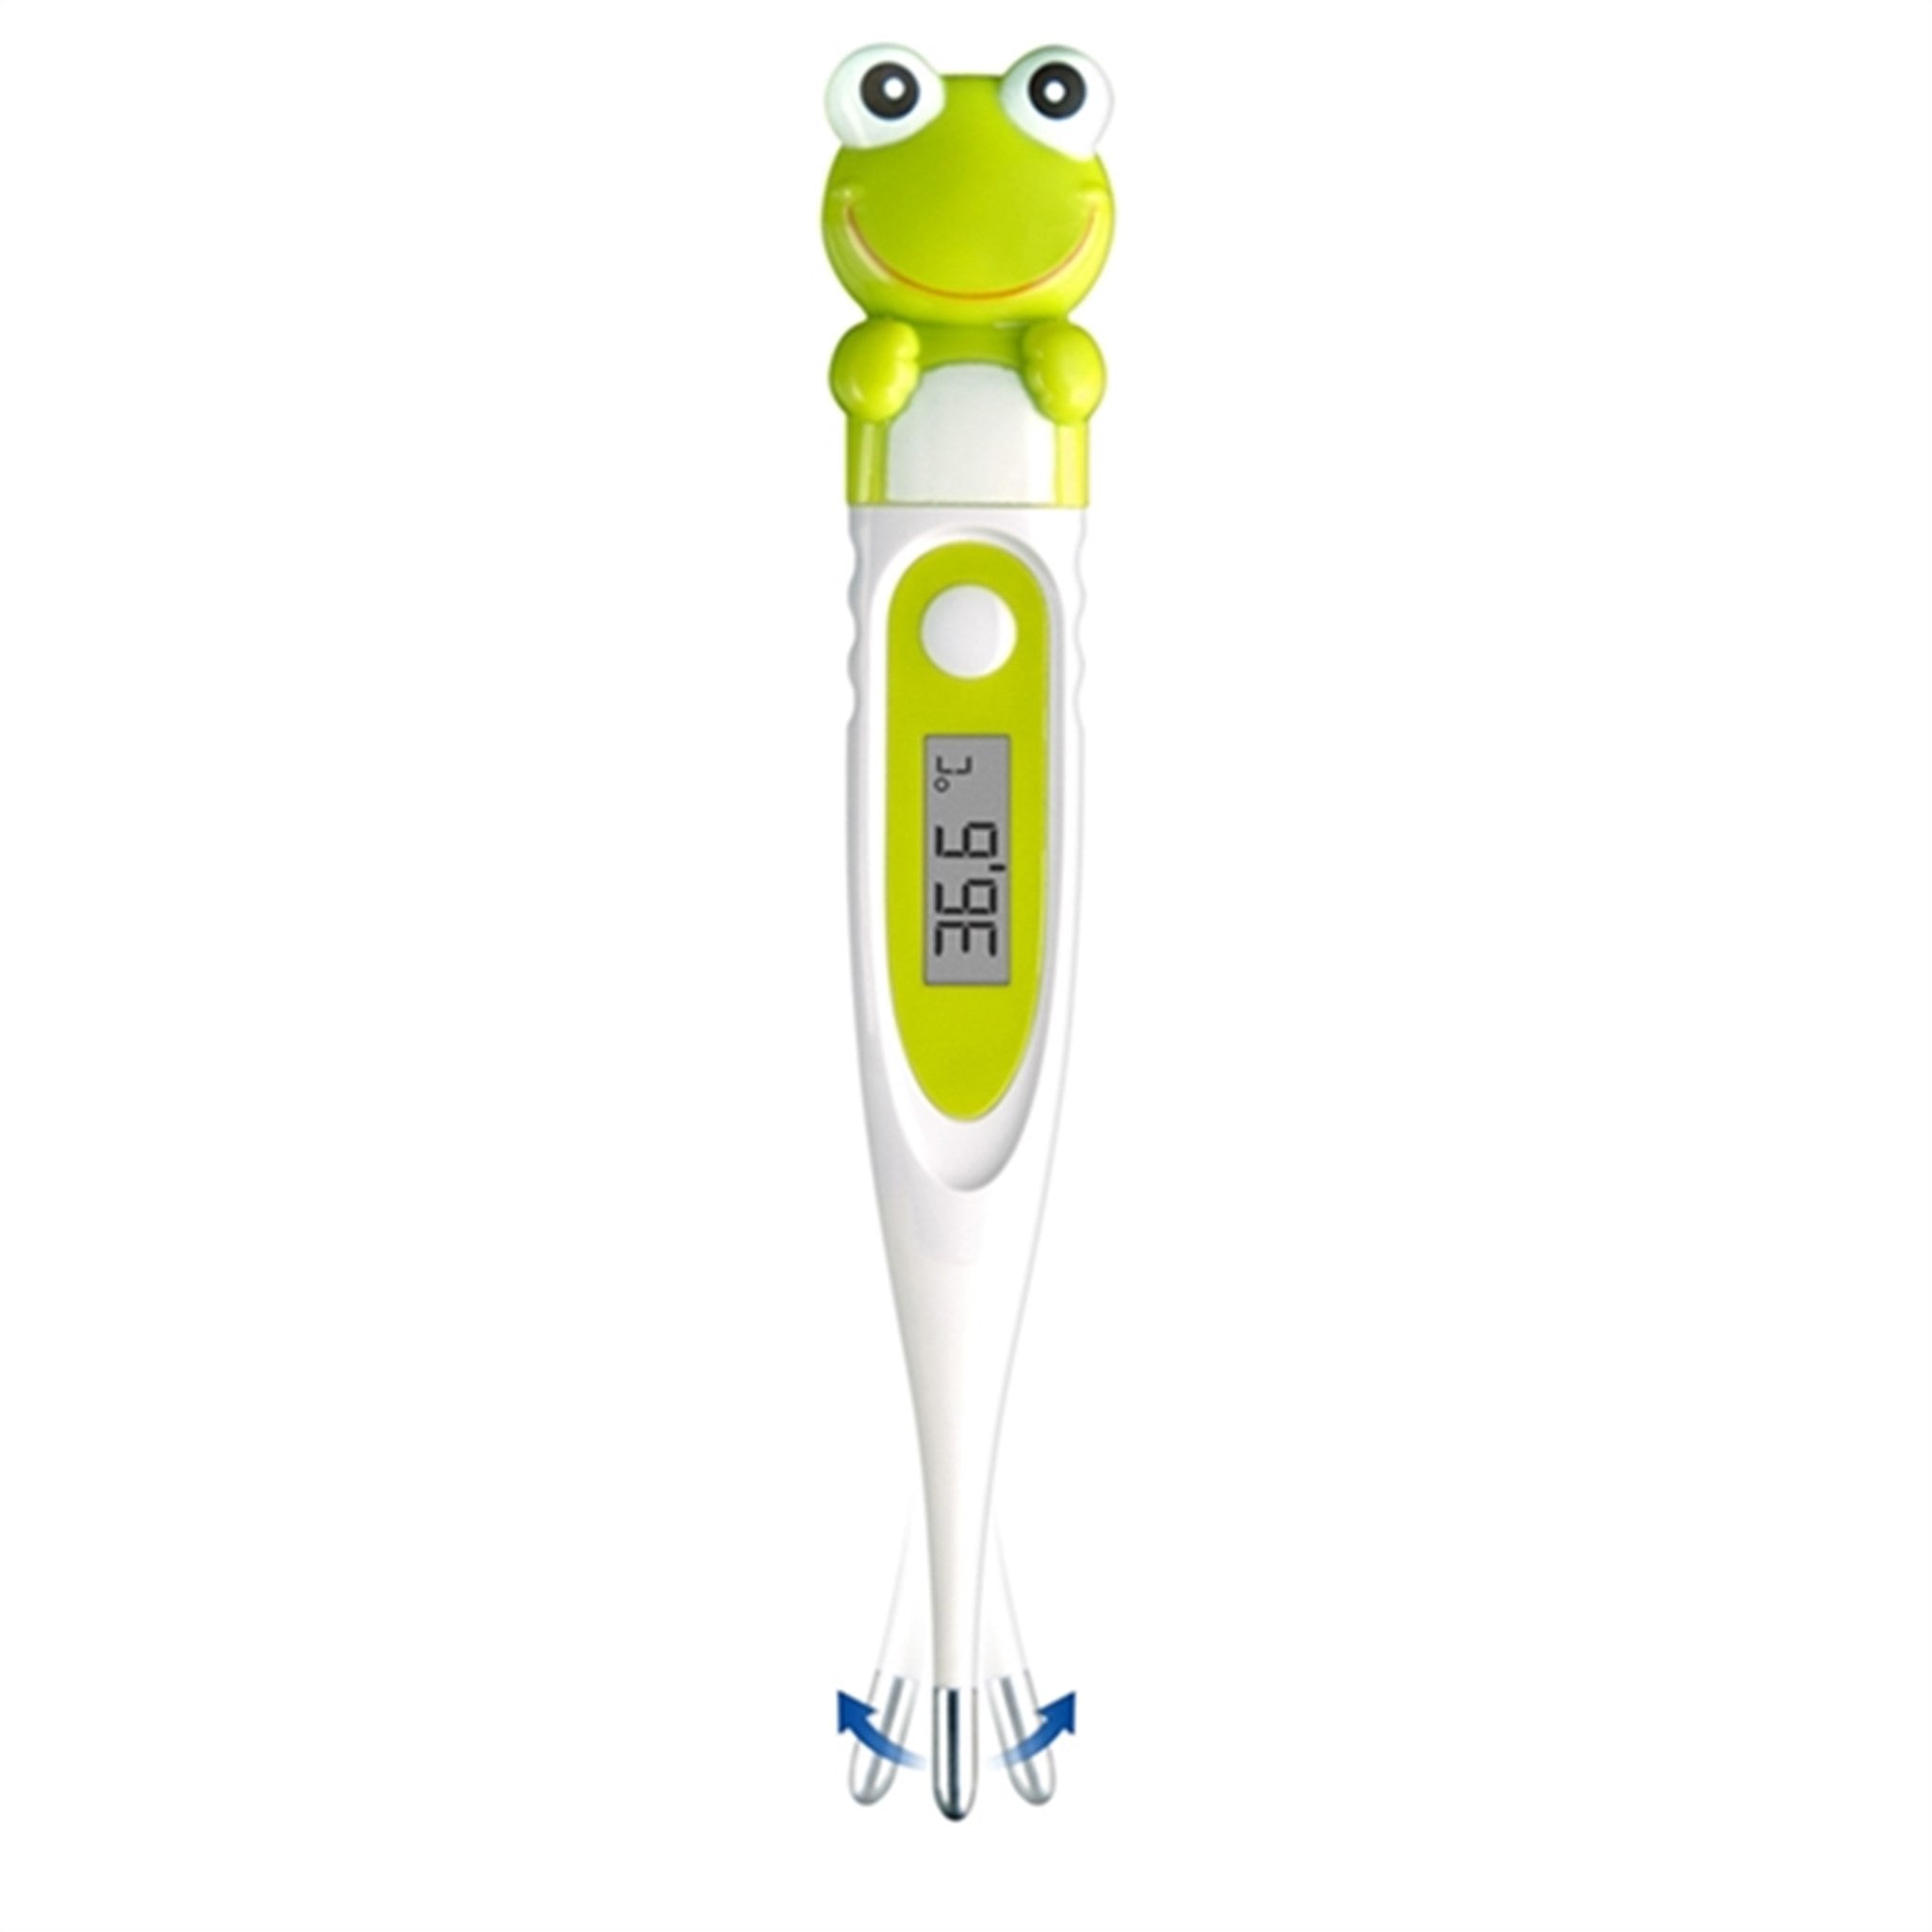 REER Digital Thermometer Frog